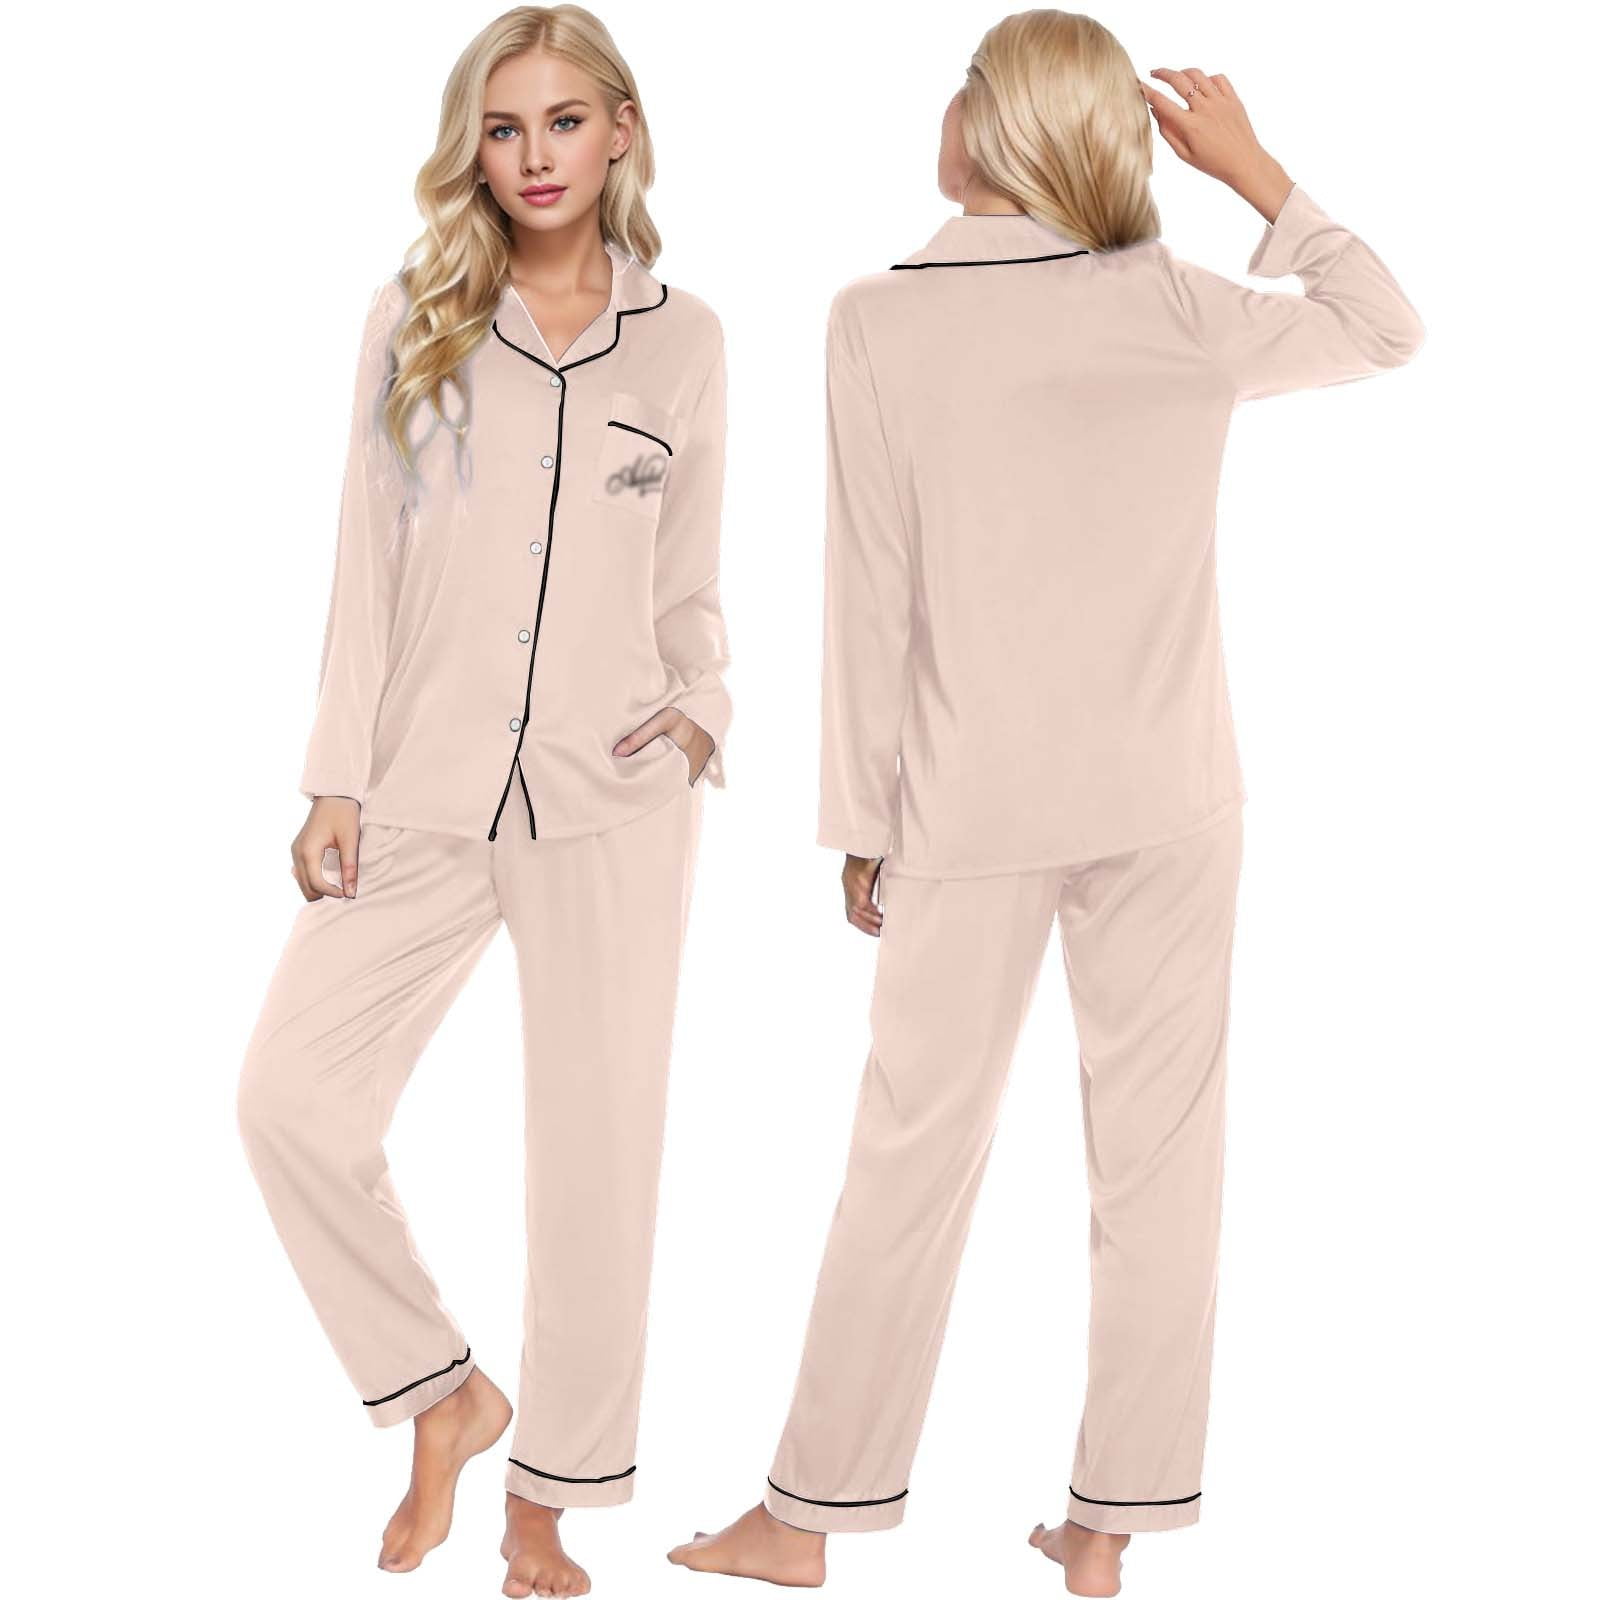 ASEIDFNSA Autumn Long Sleeve Nightwear Set for Couples Cotton Pajamas ...